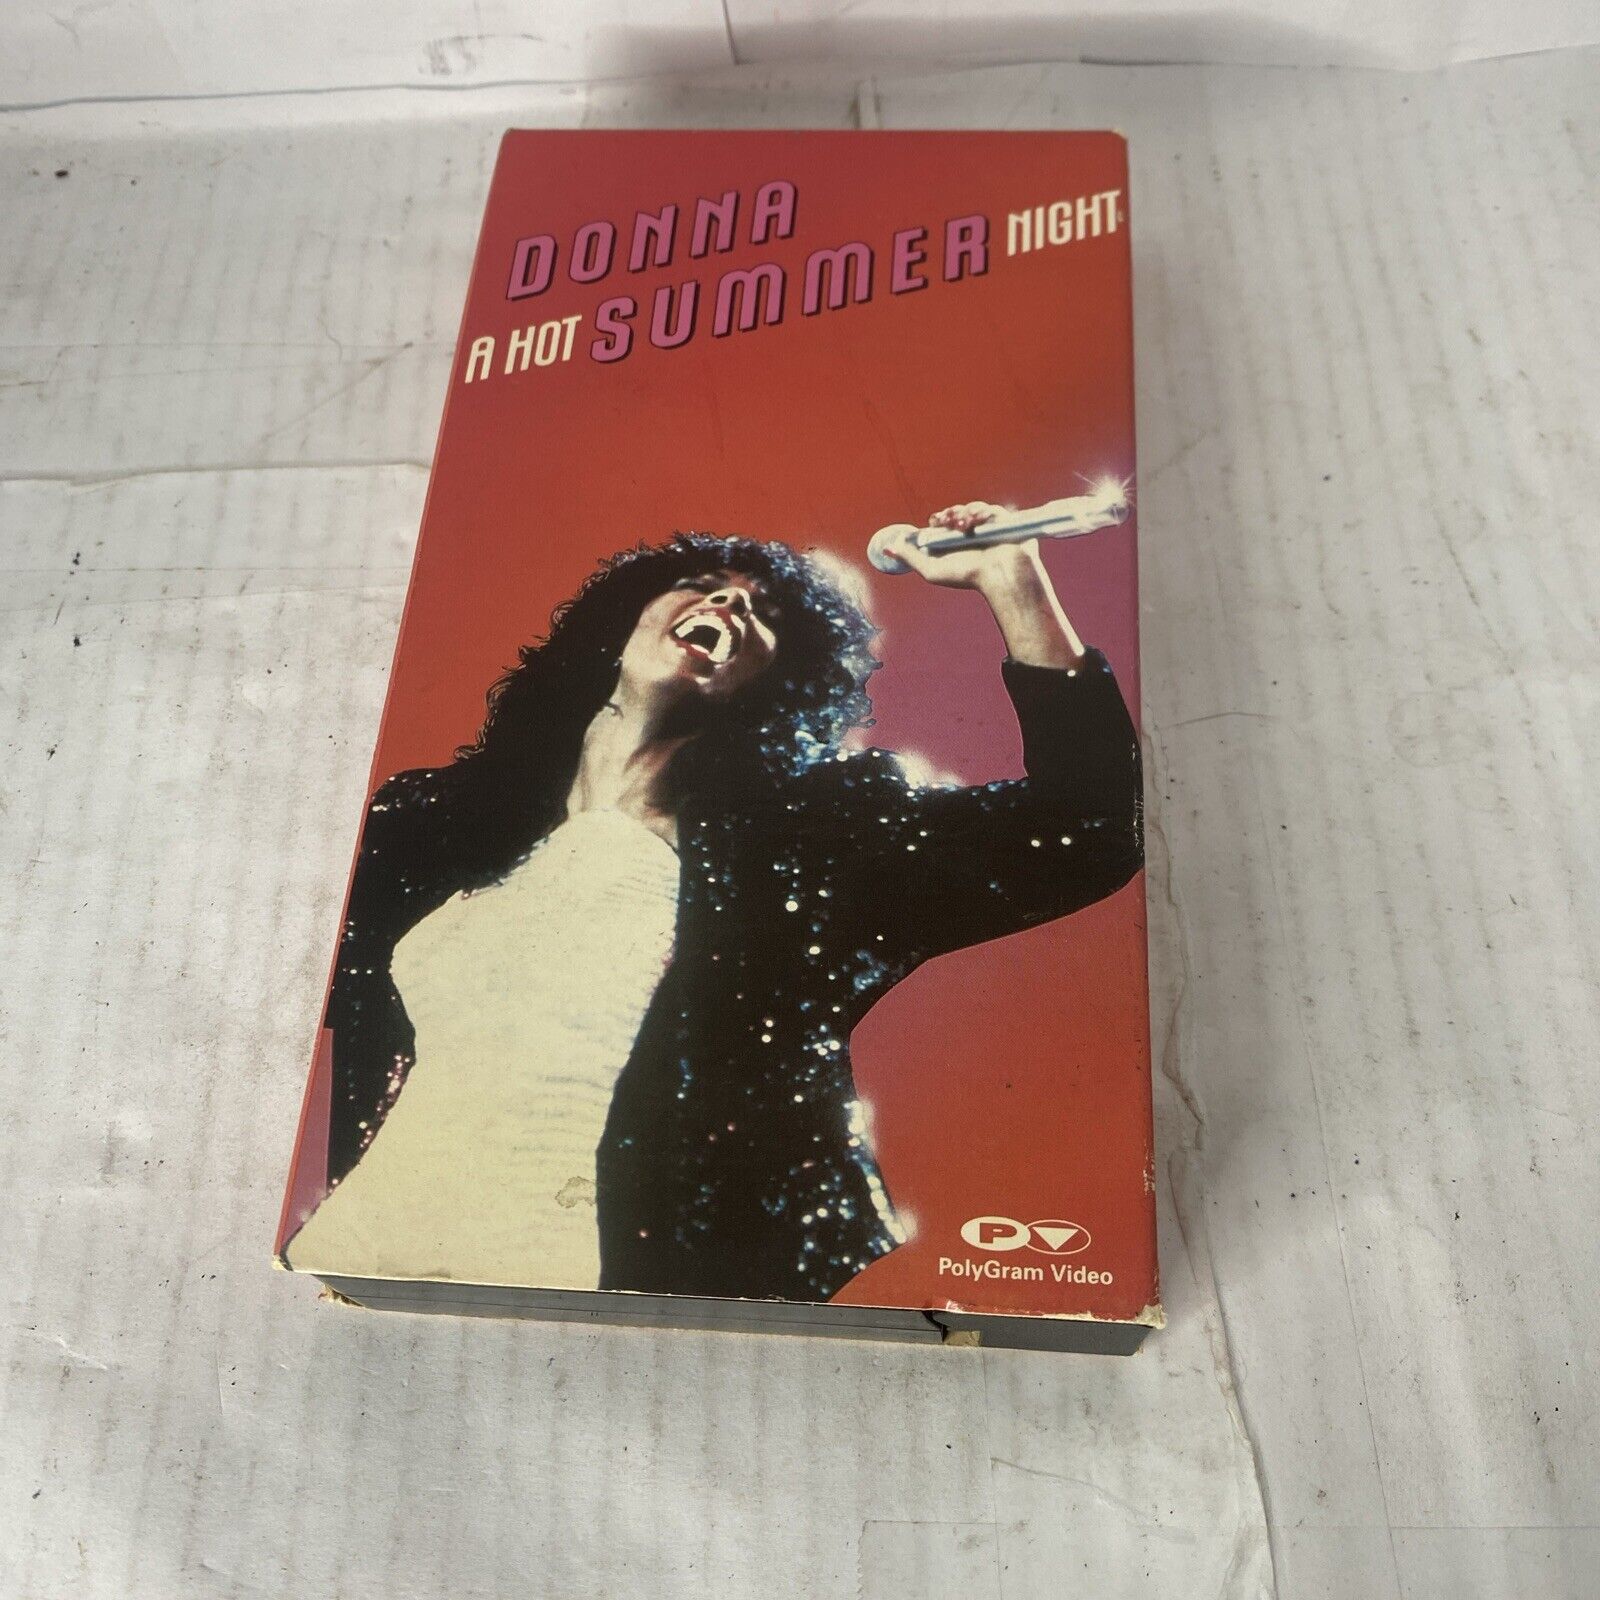 Vintage VHS A Hot Summer Night by Donna Summer 1983 Polygram Video